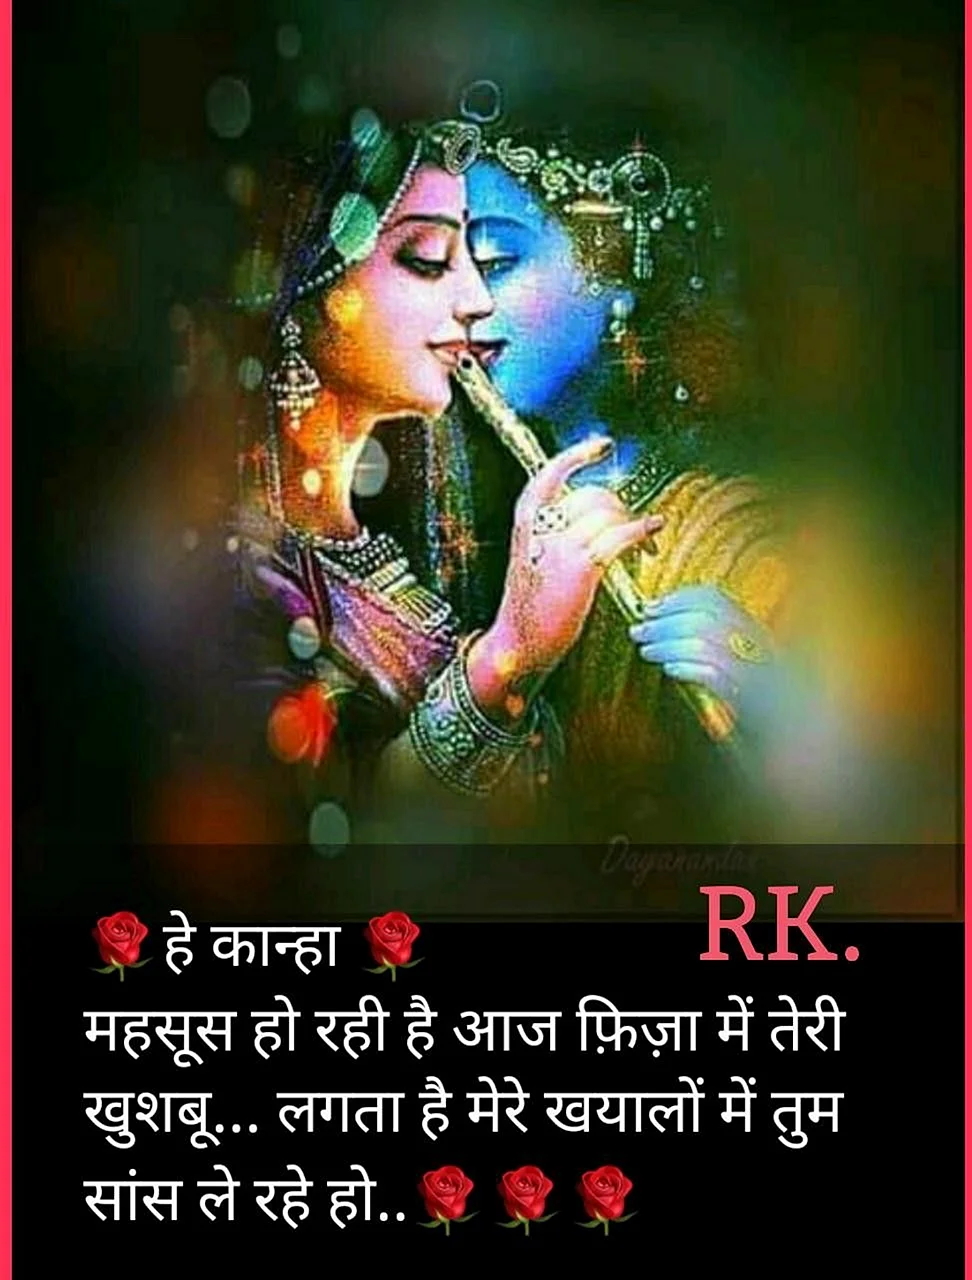 Radha Krishna Image 4K Wallpaper For iPhone